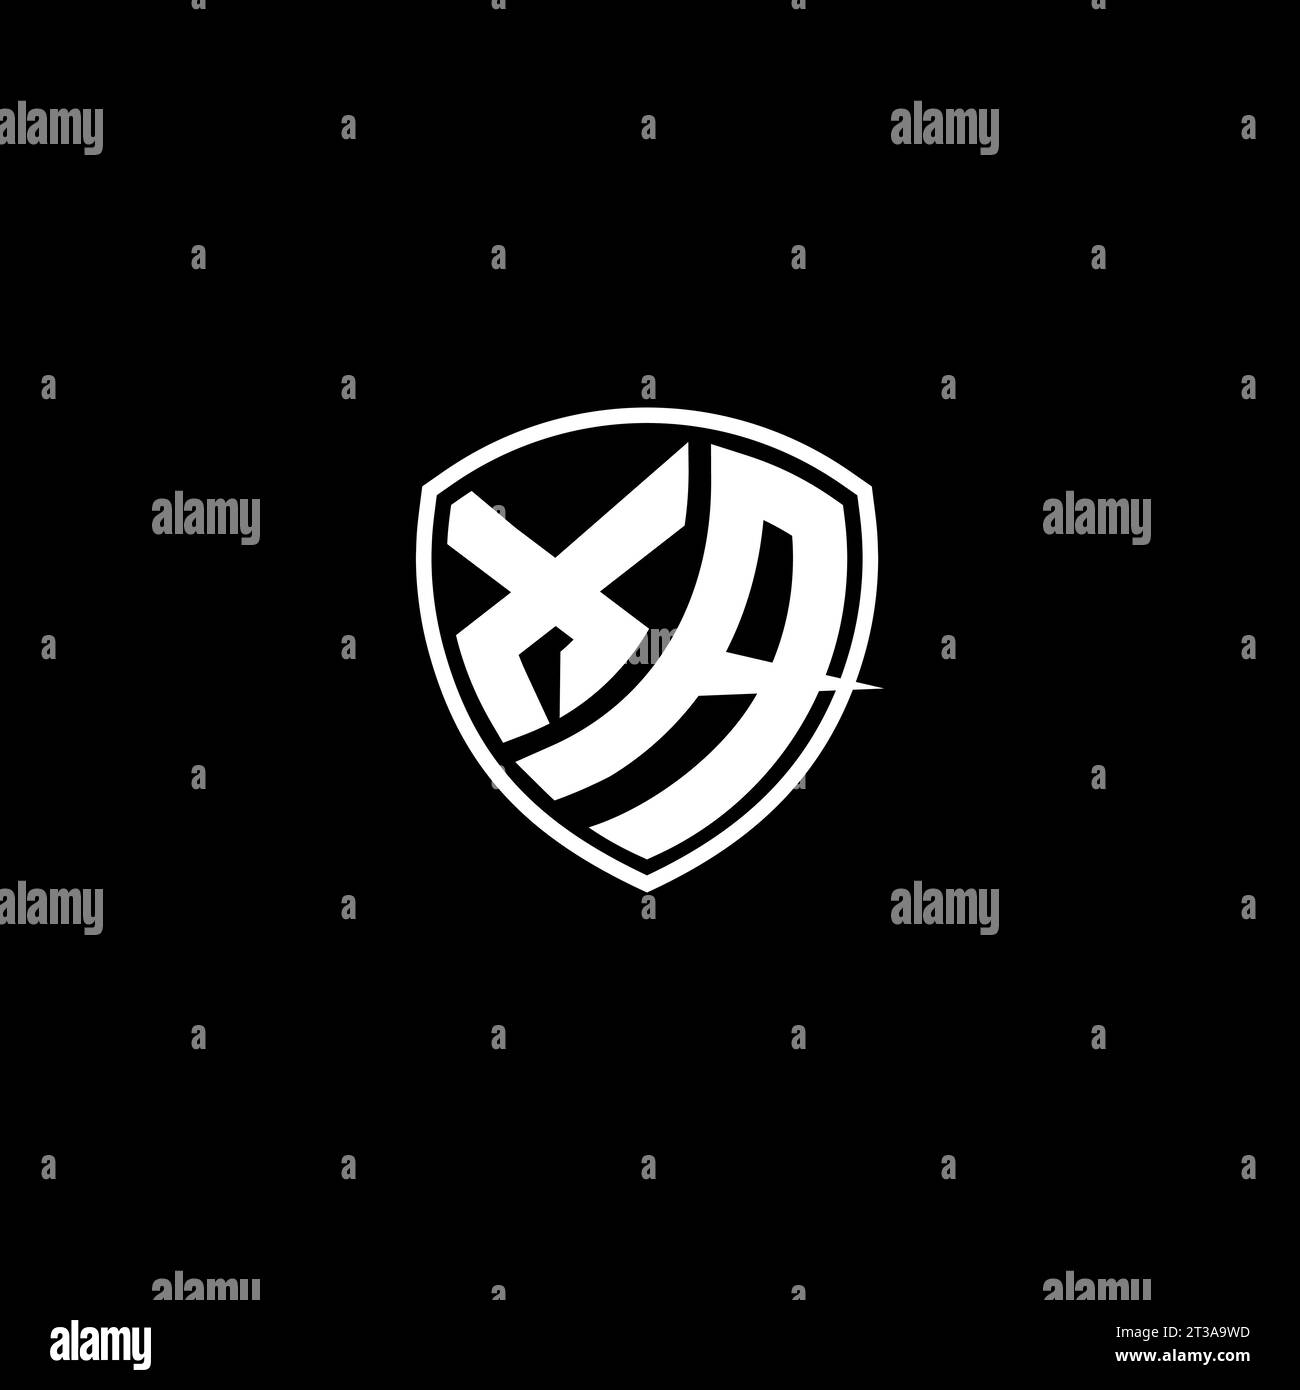 XA logo monogram emblem style with shield shape design template ideas Stock Vector